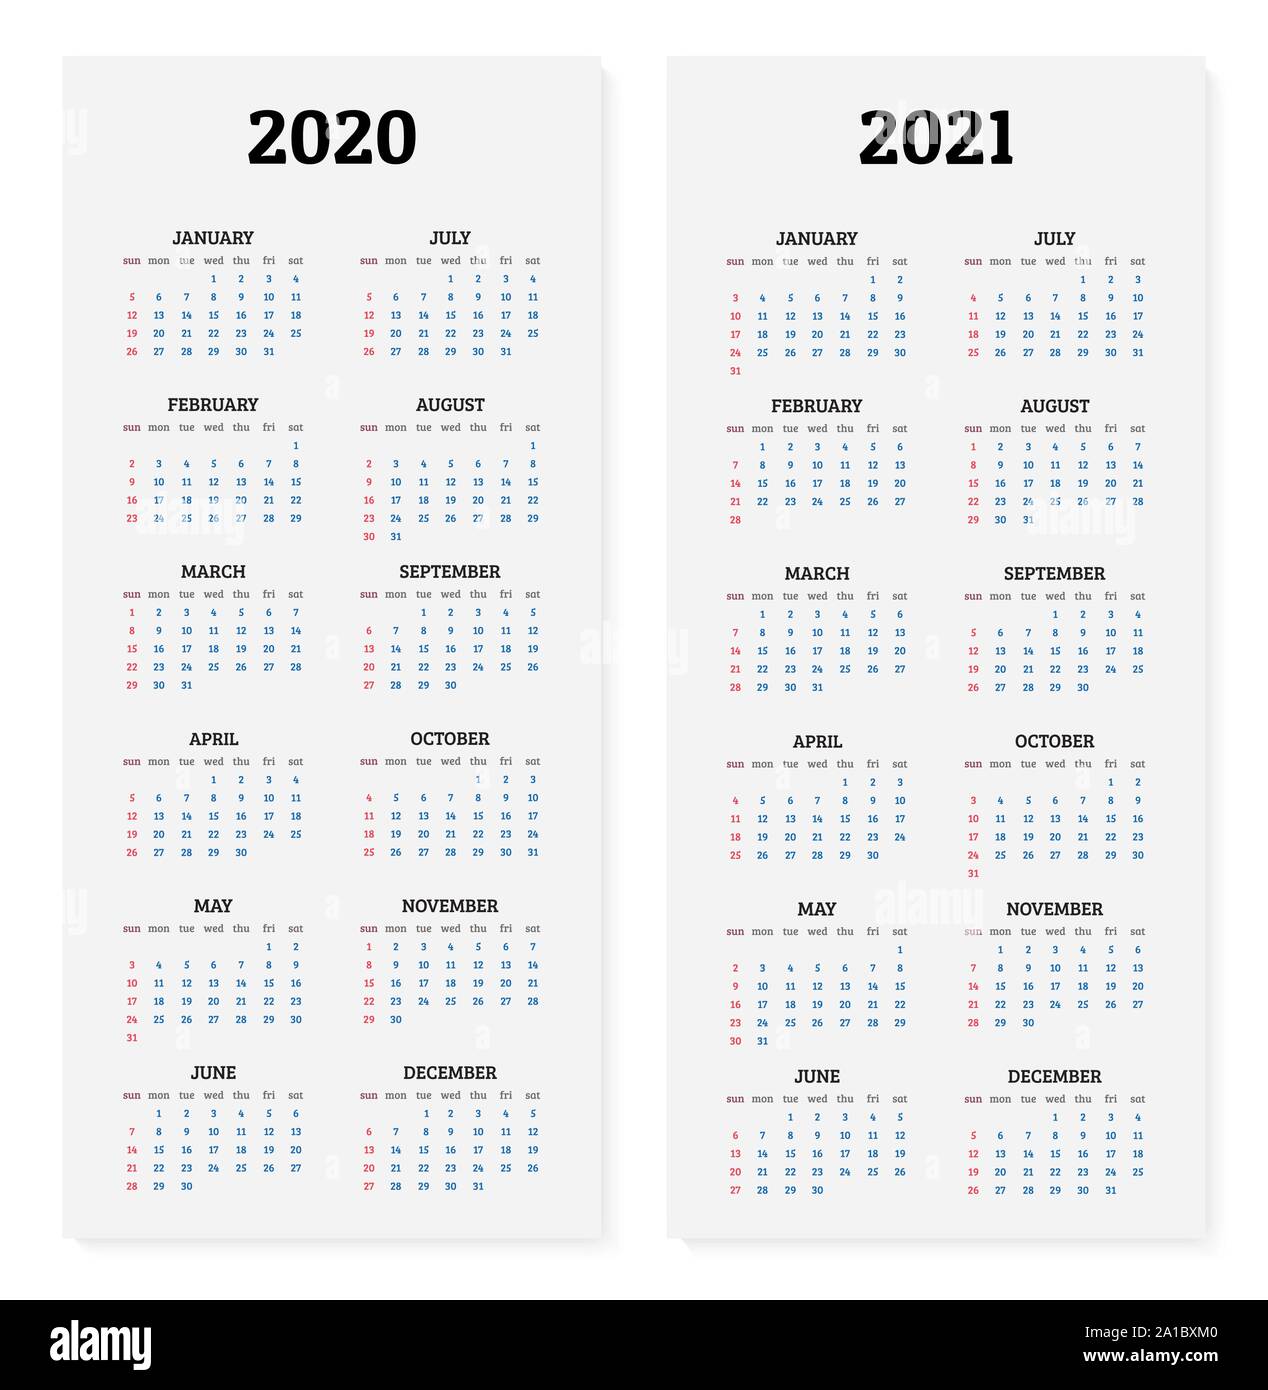 2020 and 2021 annual calendar. Vector illustration Stock Vector